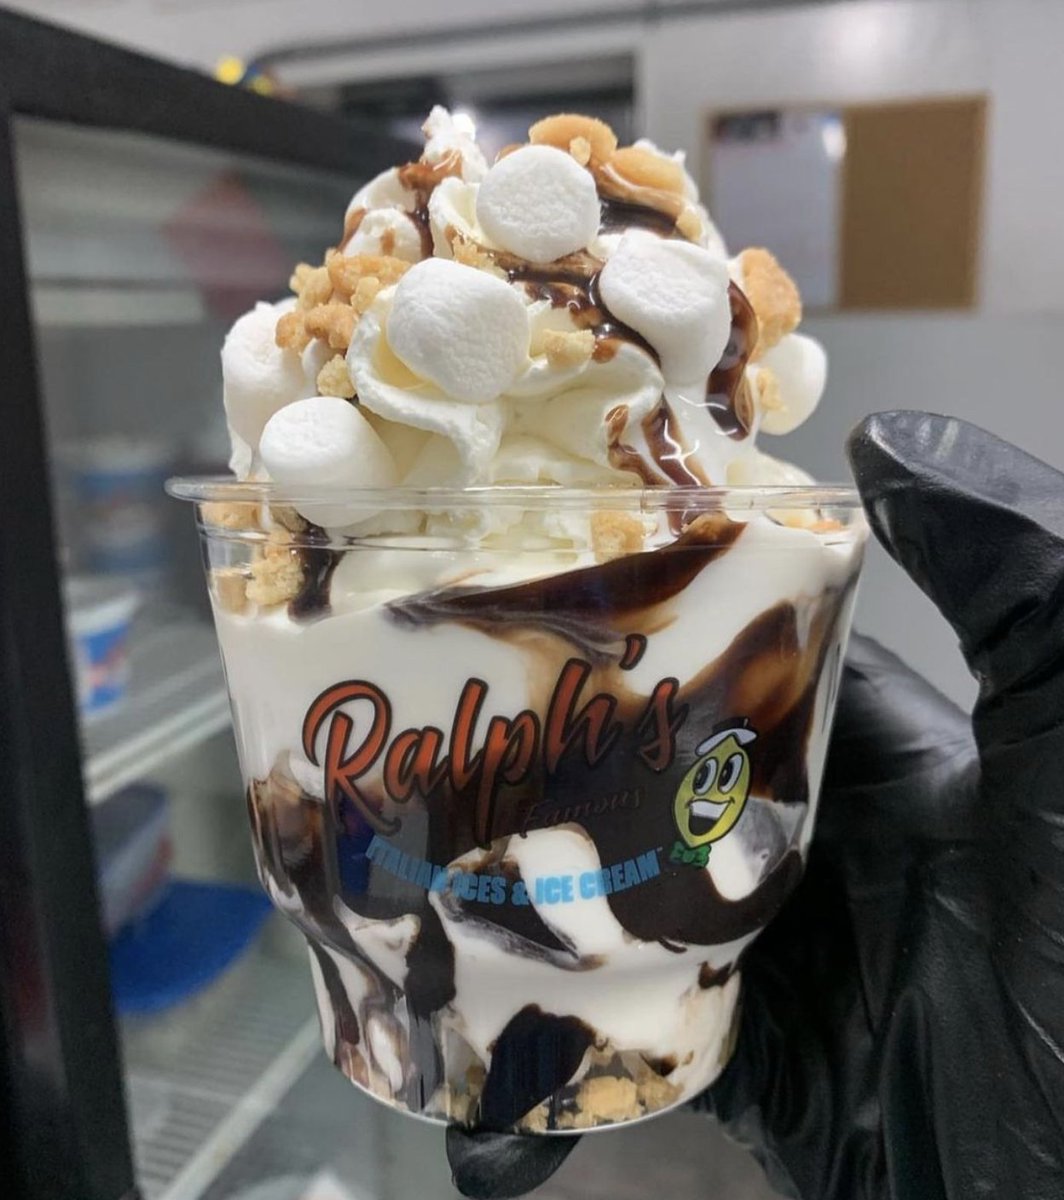 Marshmallow Crunch Sundae= Vanilla Ice Cream with marshmallow sauce, mini marshmallows and graham crackers 😍
@ralphsicespatchogue
.
.
.
#ralphsfamous #ralphsfamousitalianices #ralphsfamousicecream #marshmallowcrunch #smores #icecream #icecreamsundae #fanfavorite #summerofralphs